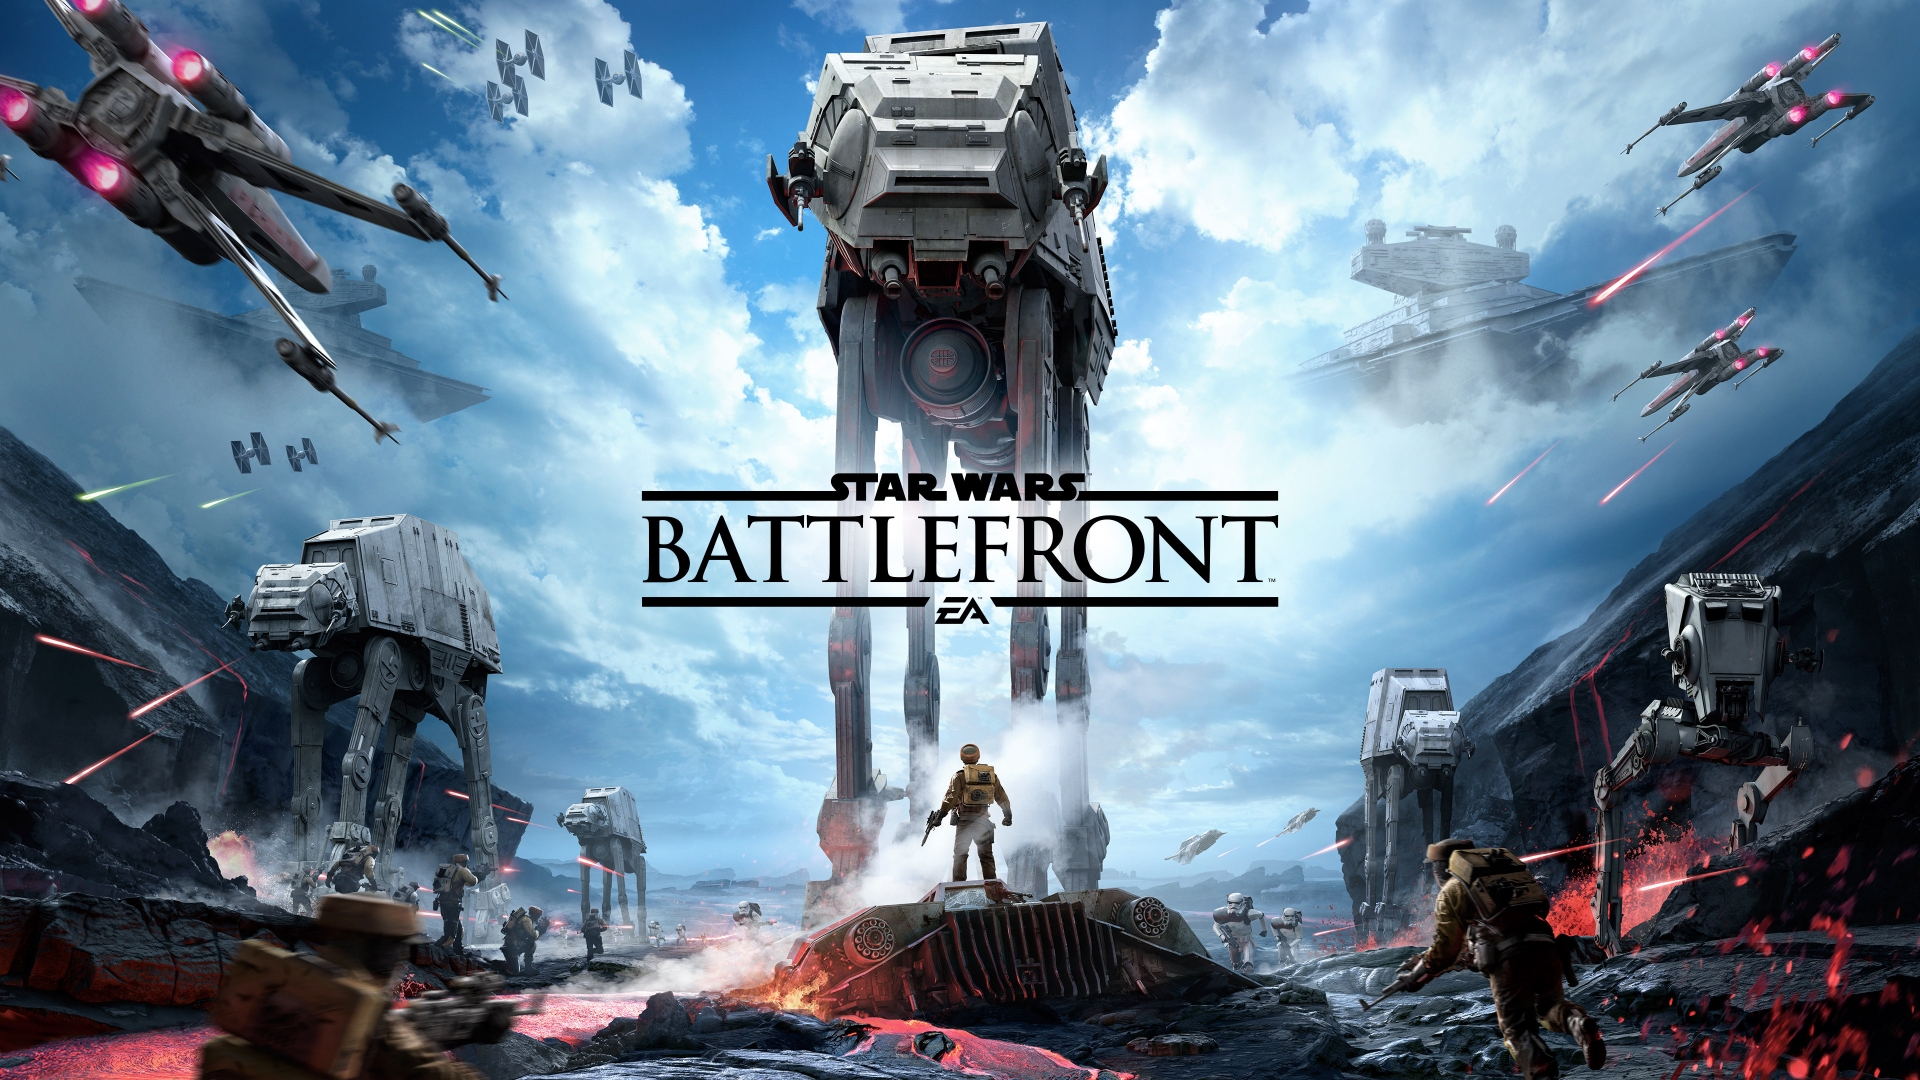 Star Wars Battlefront Poster for 1920 x 1080 HDTV 1080p resolution